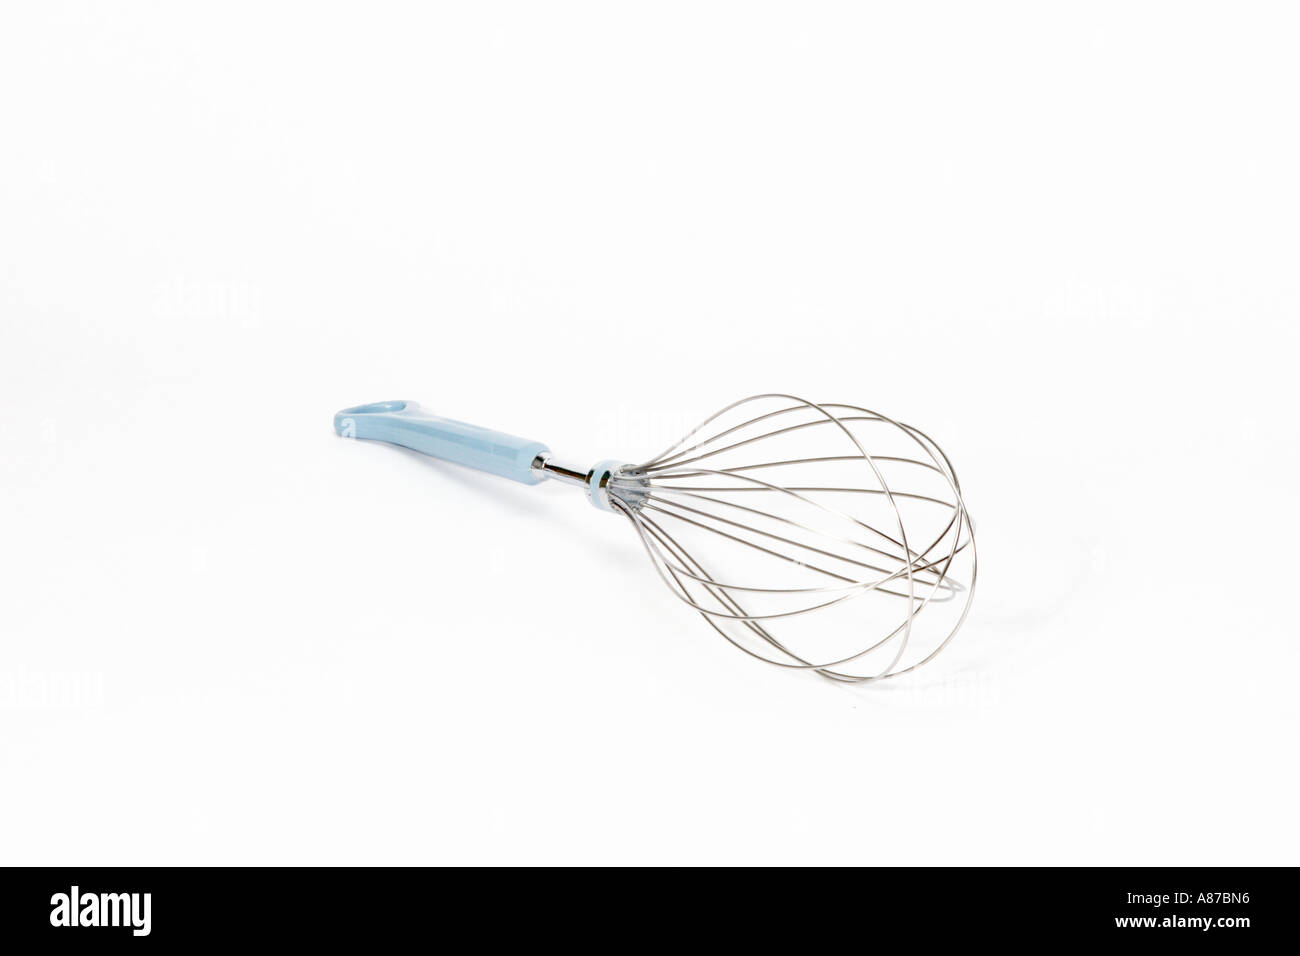 Close up di un acciaio stainelss frusta utensile da cucina con una maniglia blu Foto Stock